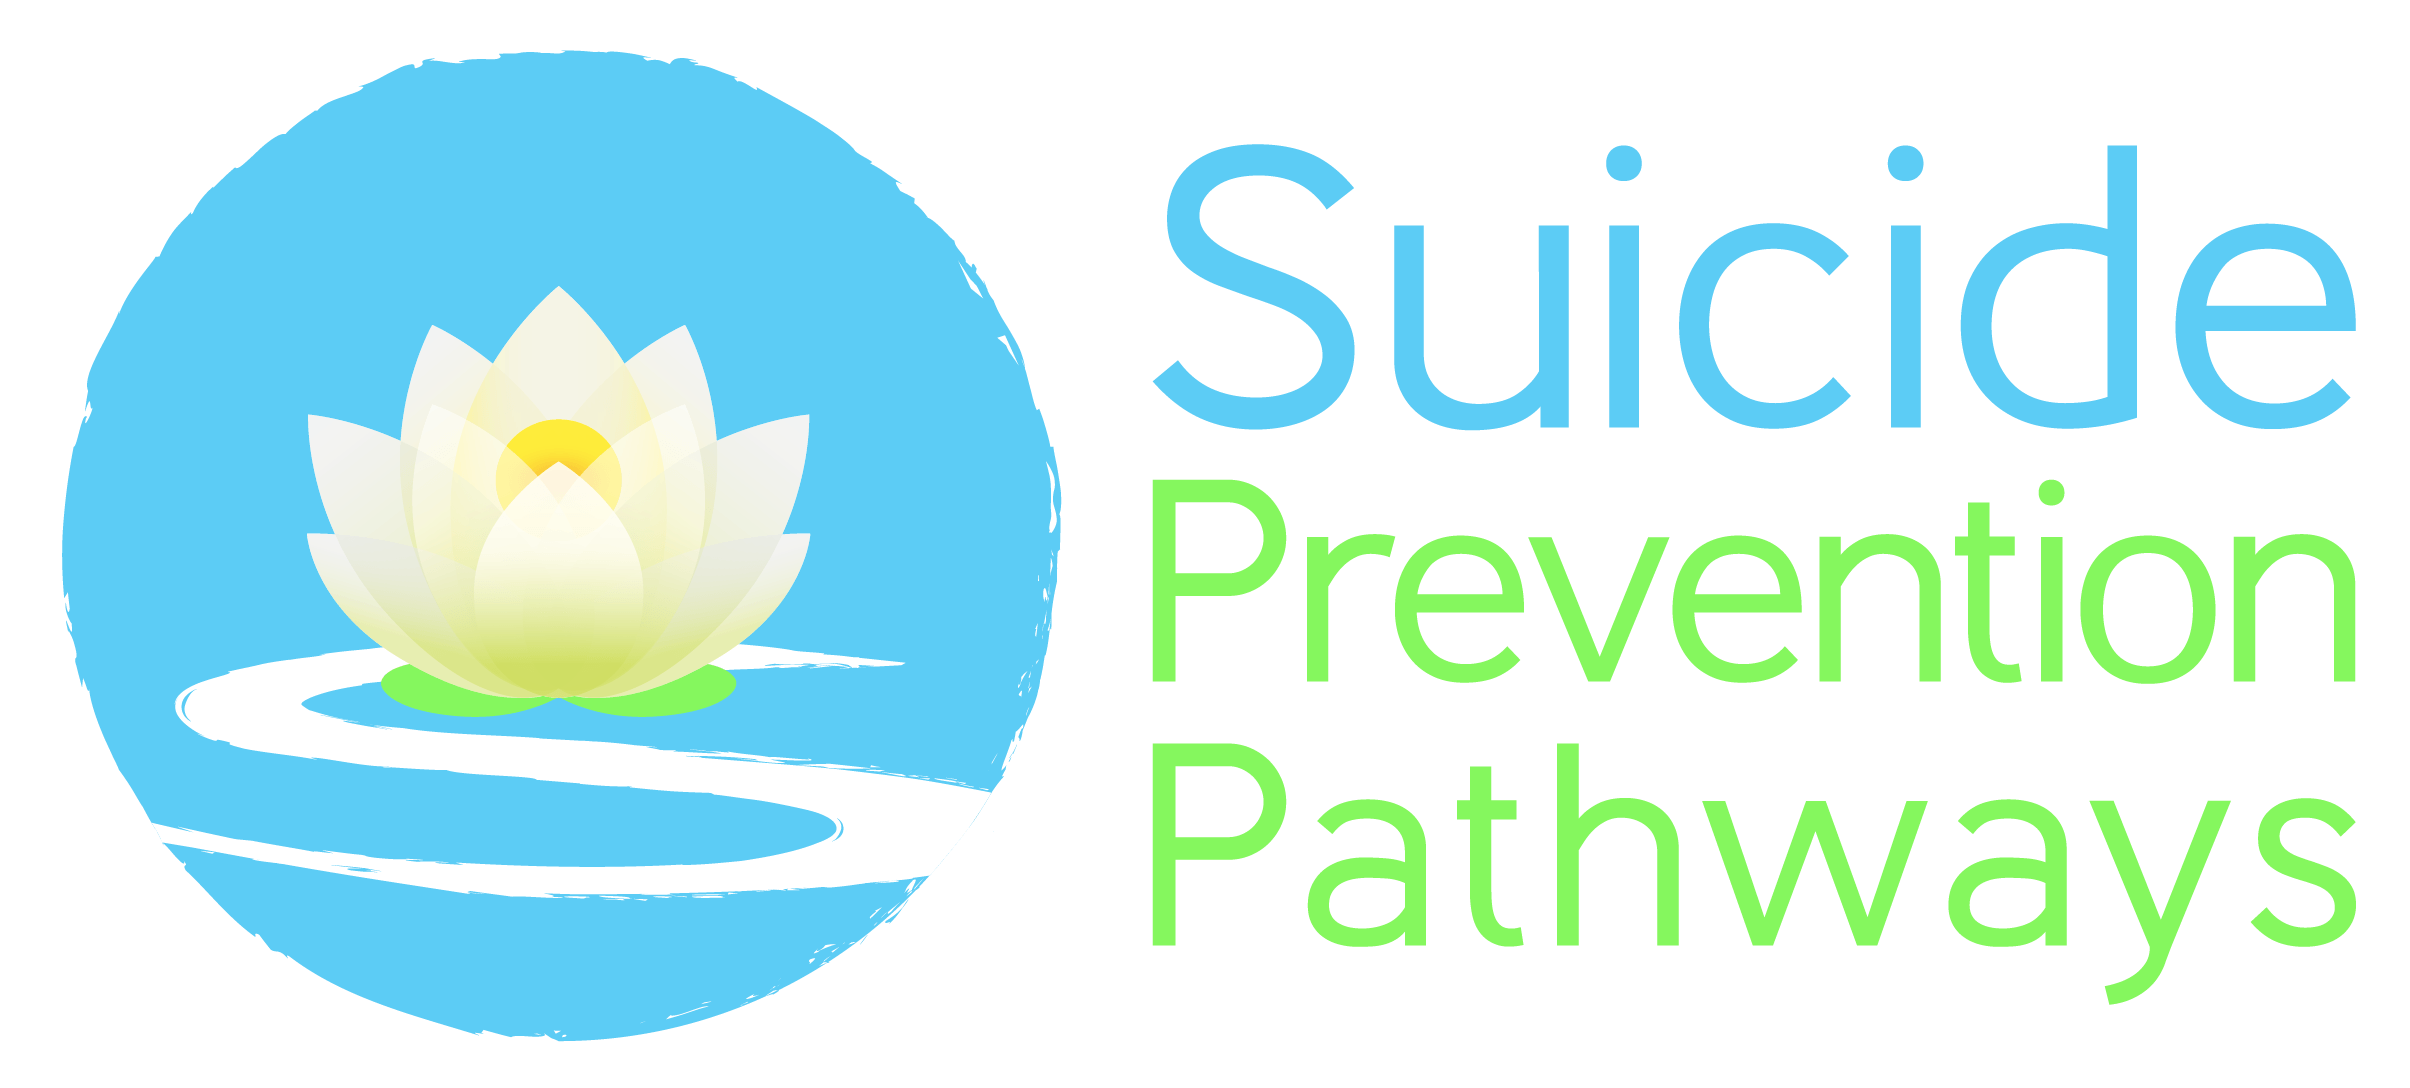 Suicide Prevention Pathways Logo